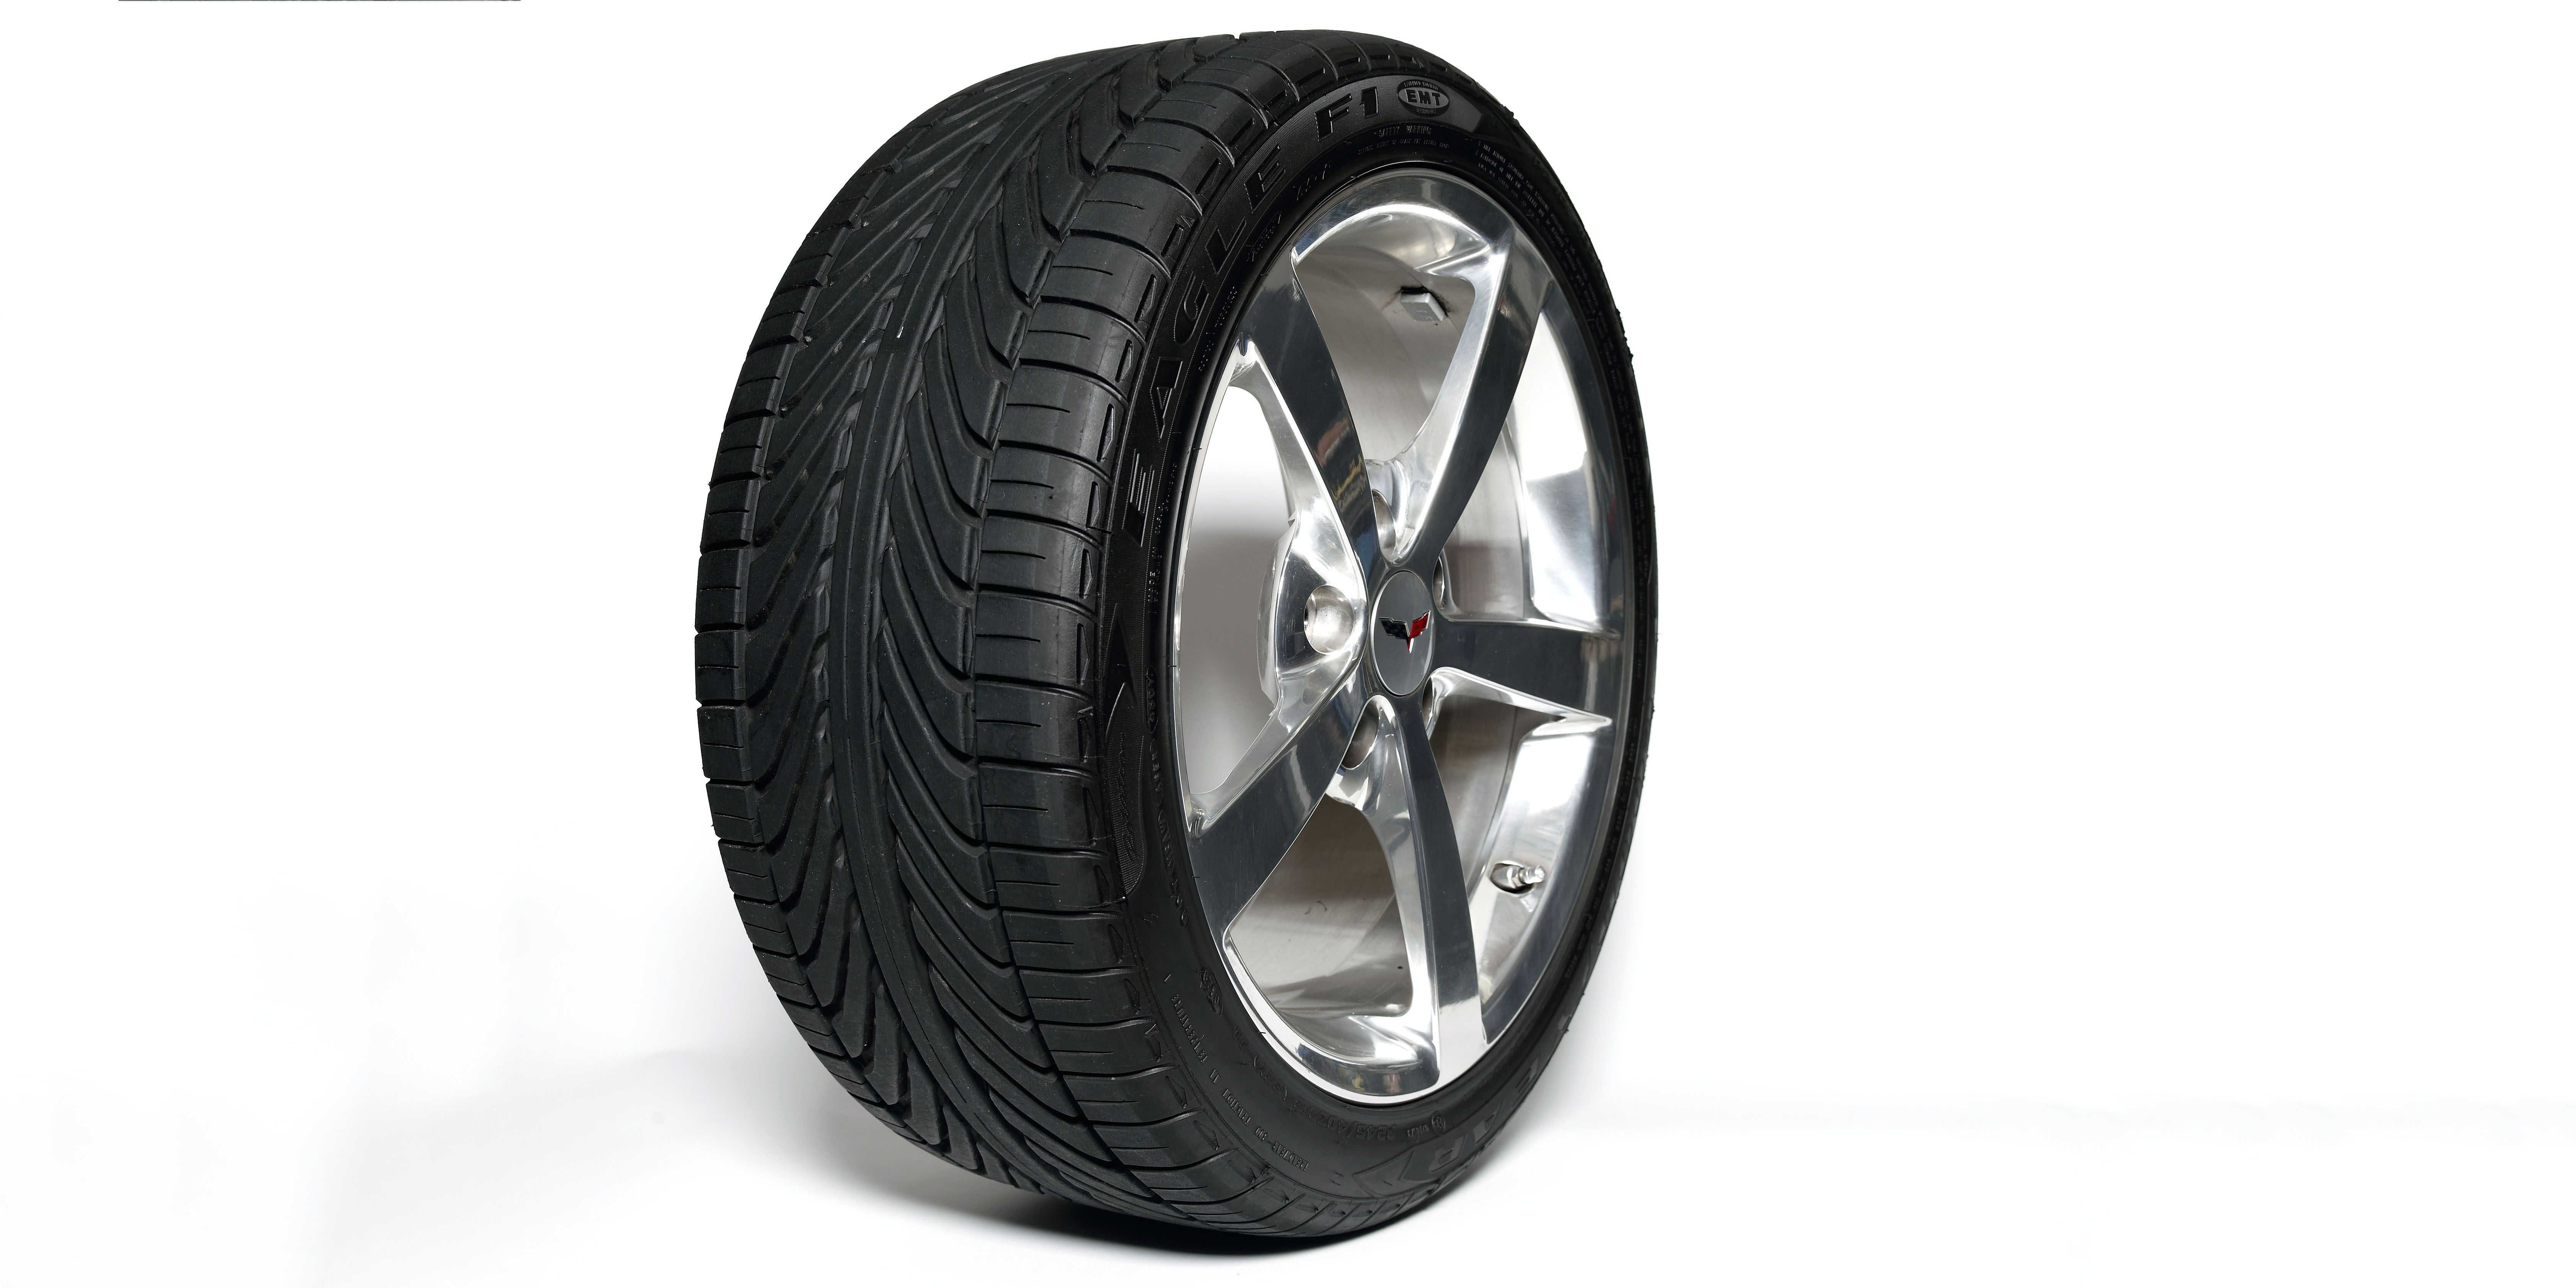 Go Kart Wheels and Tires New Wheels Used Tires Pair Optional Wheel Hubs 